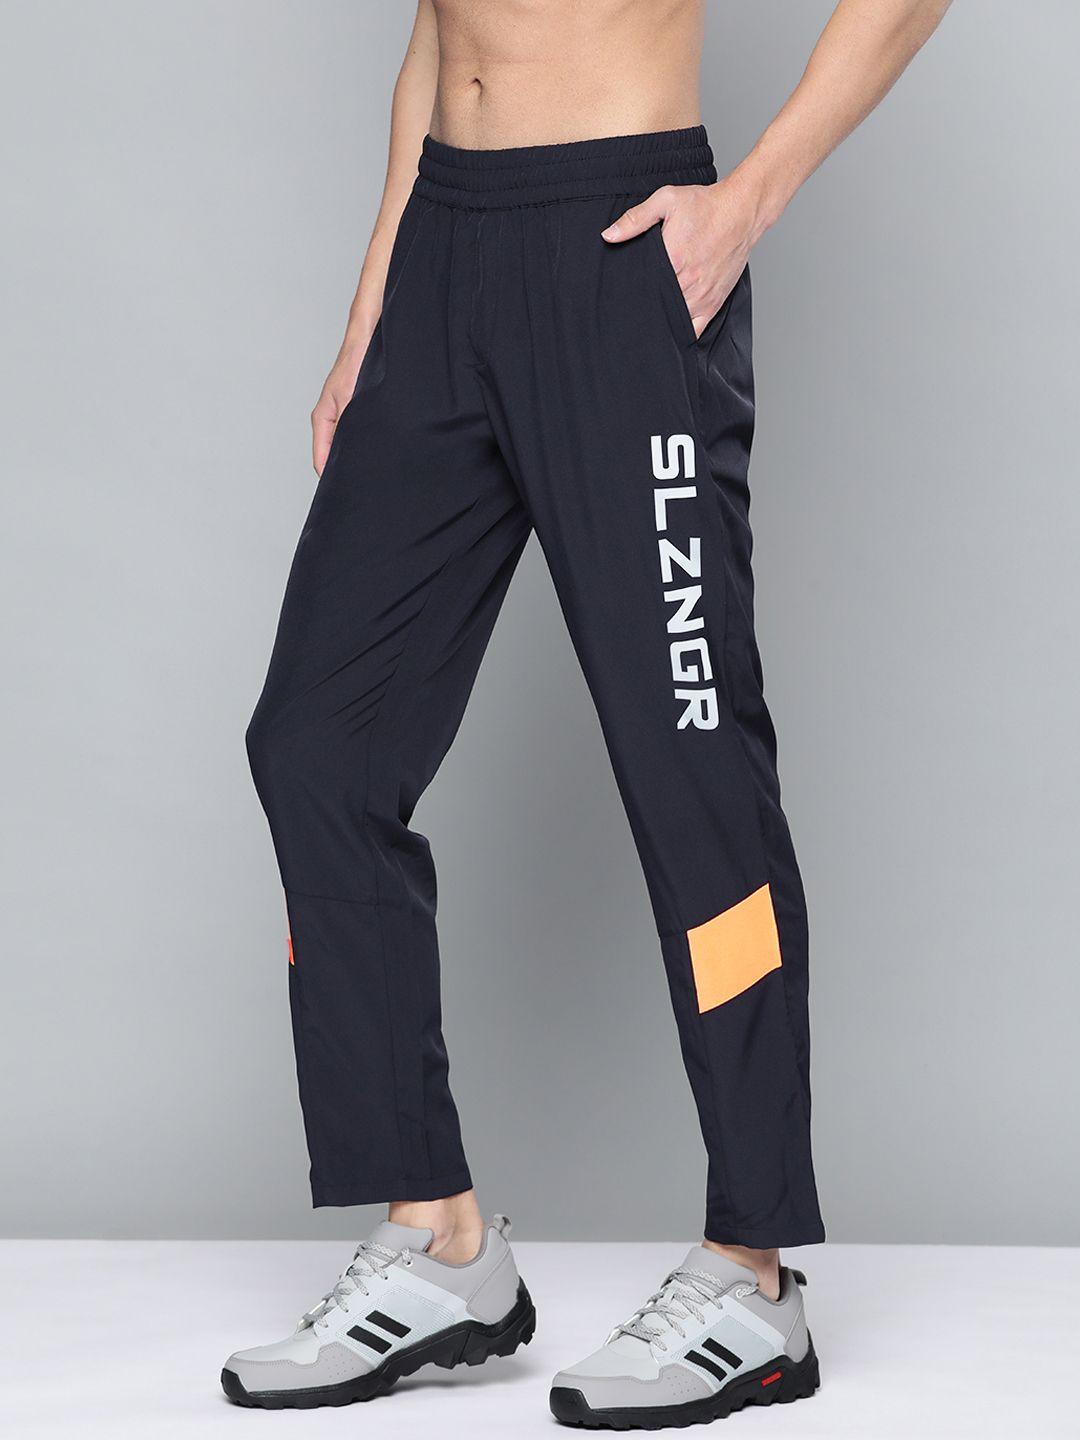 slazenger men navy blue brand logo printed track pants with reflective detail